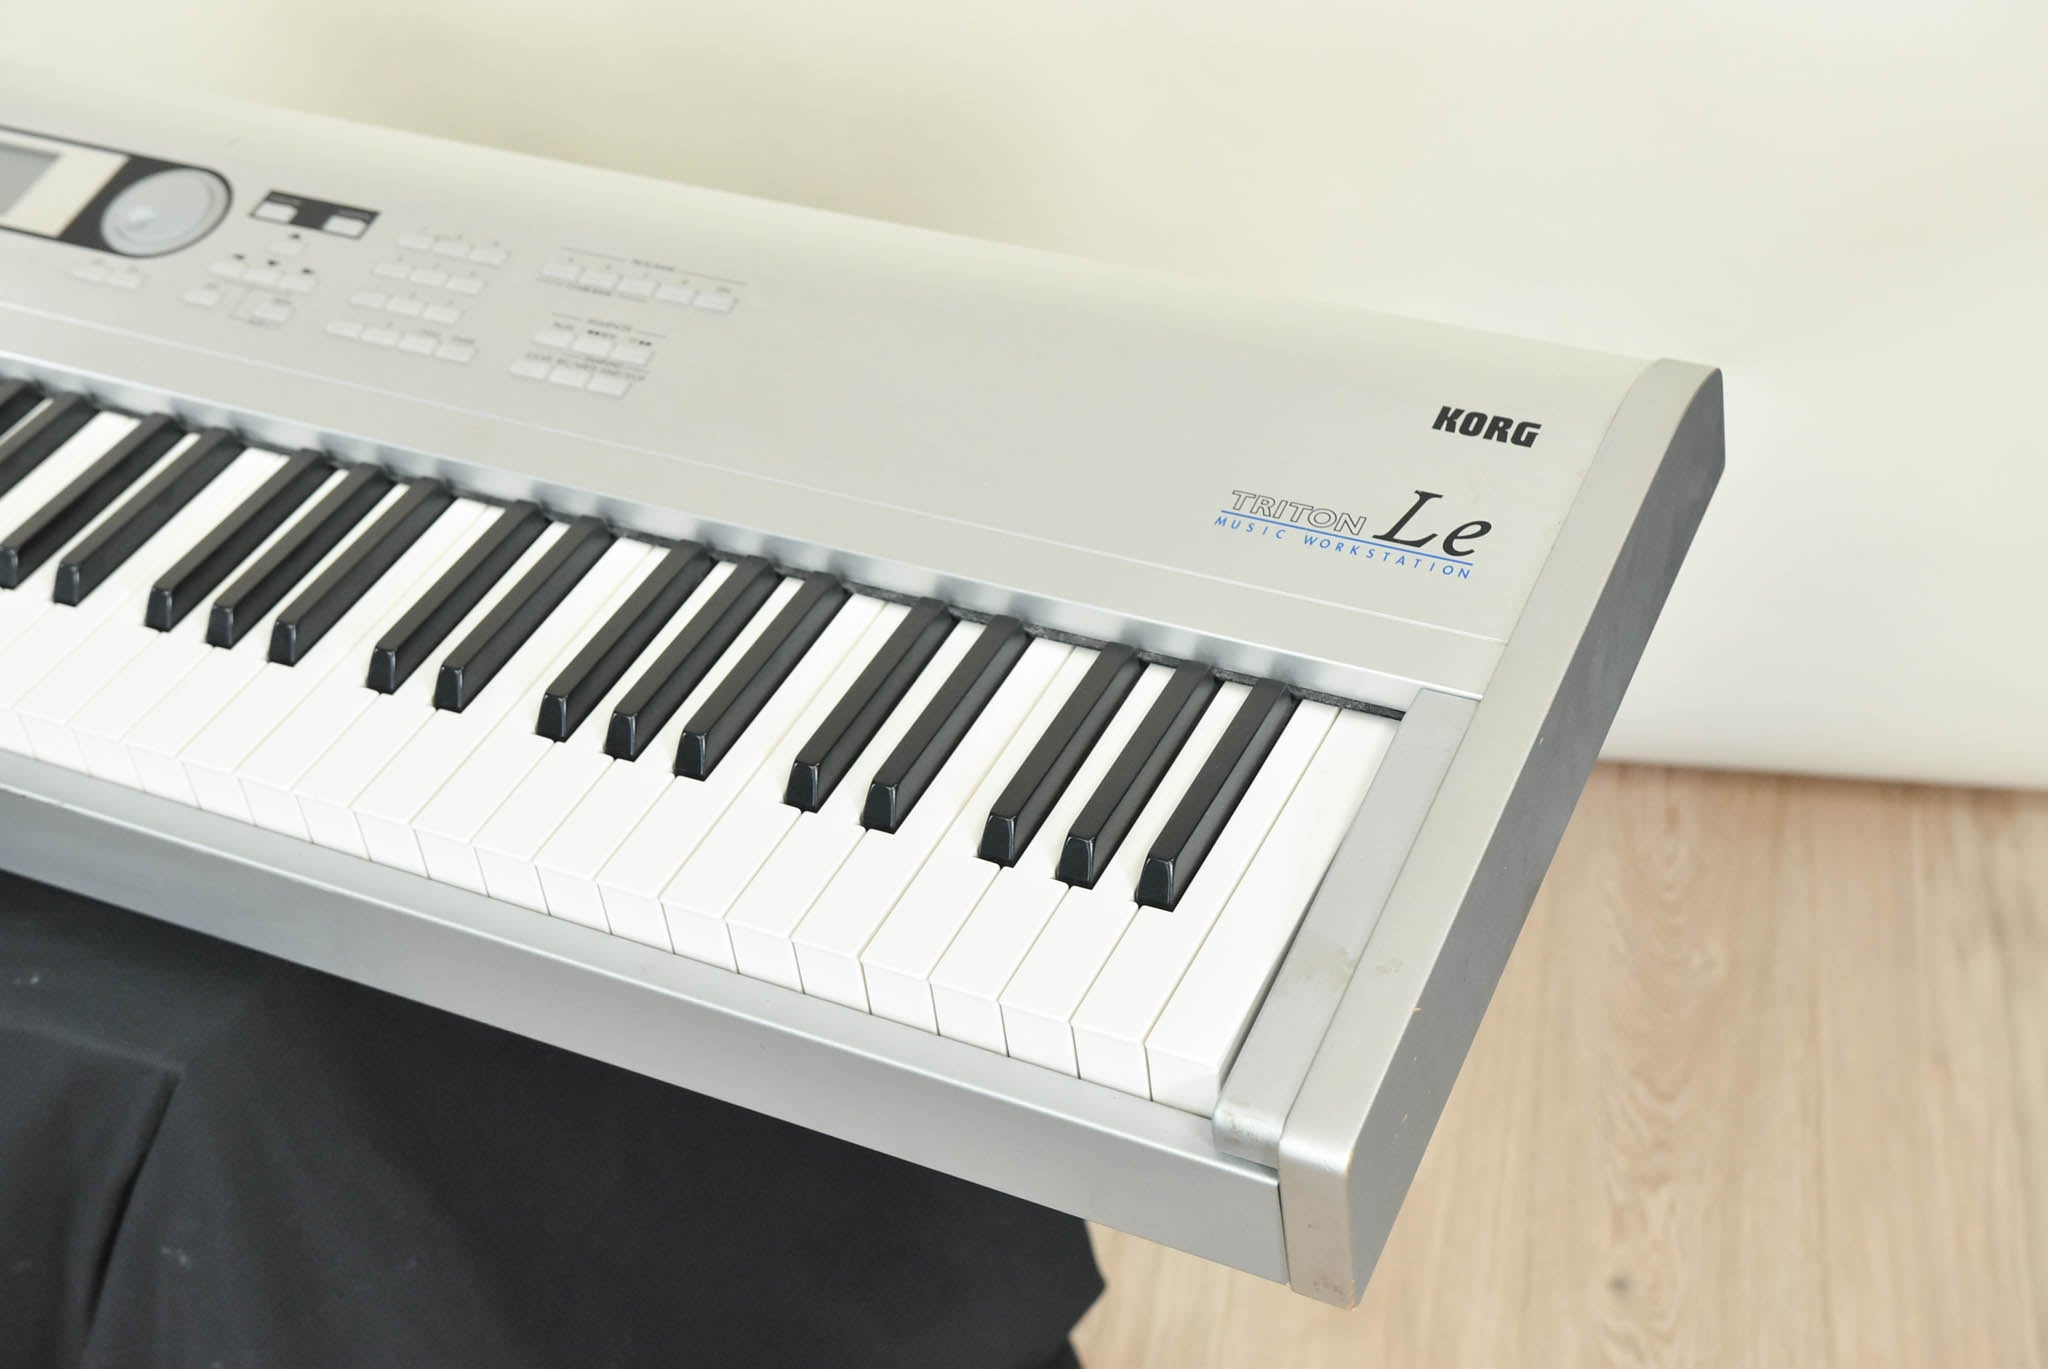 Korg TRITON Le 88 Music Workstation Keyboard